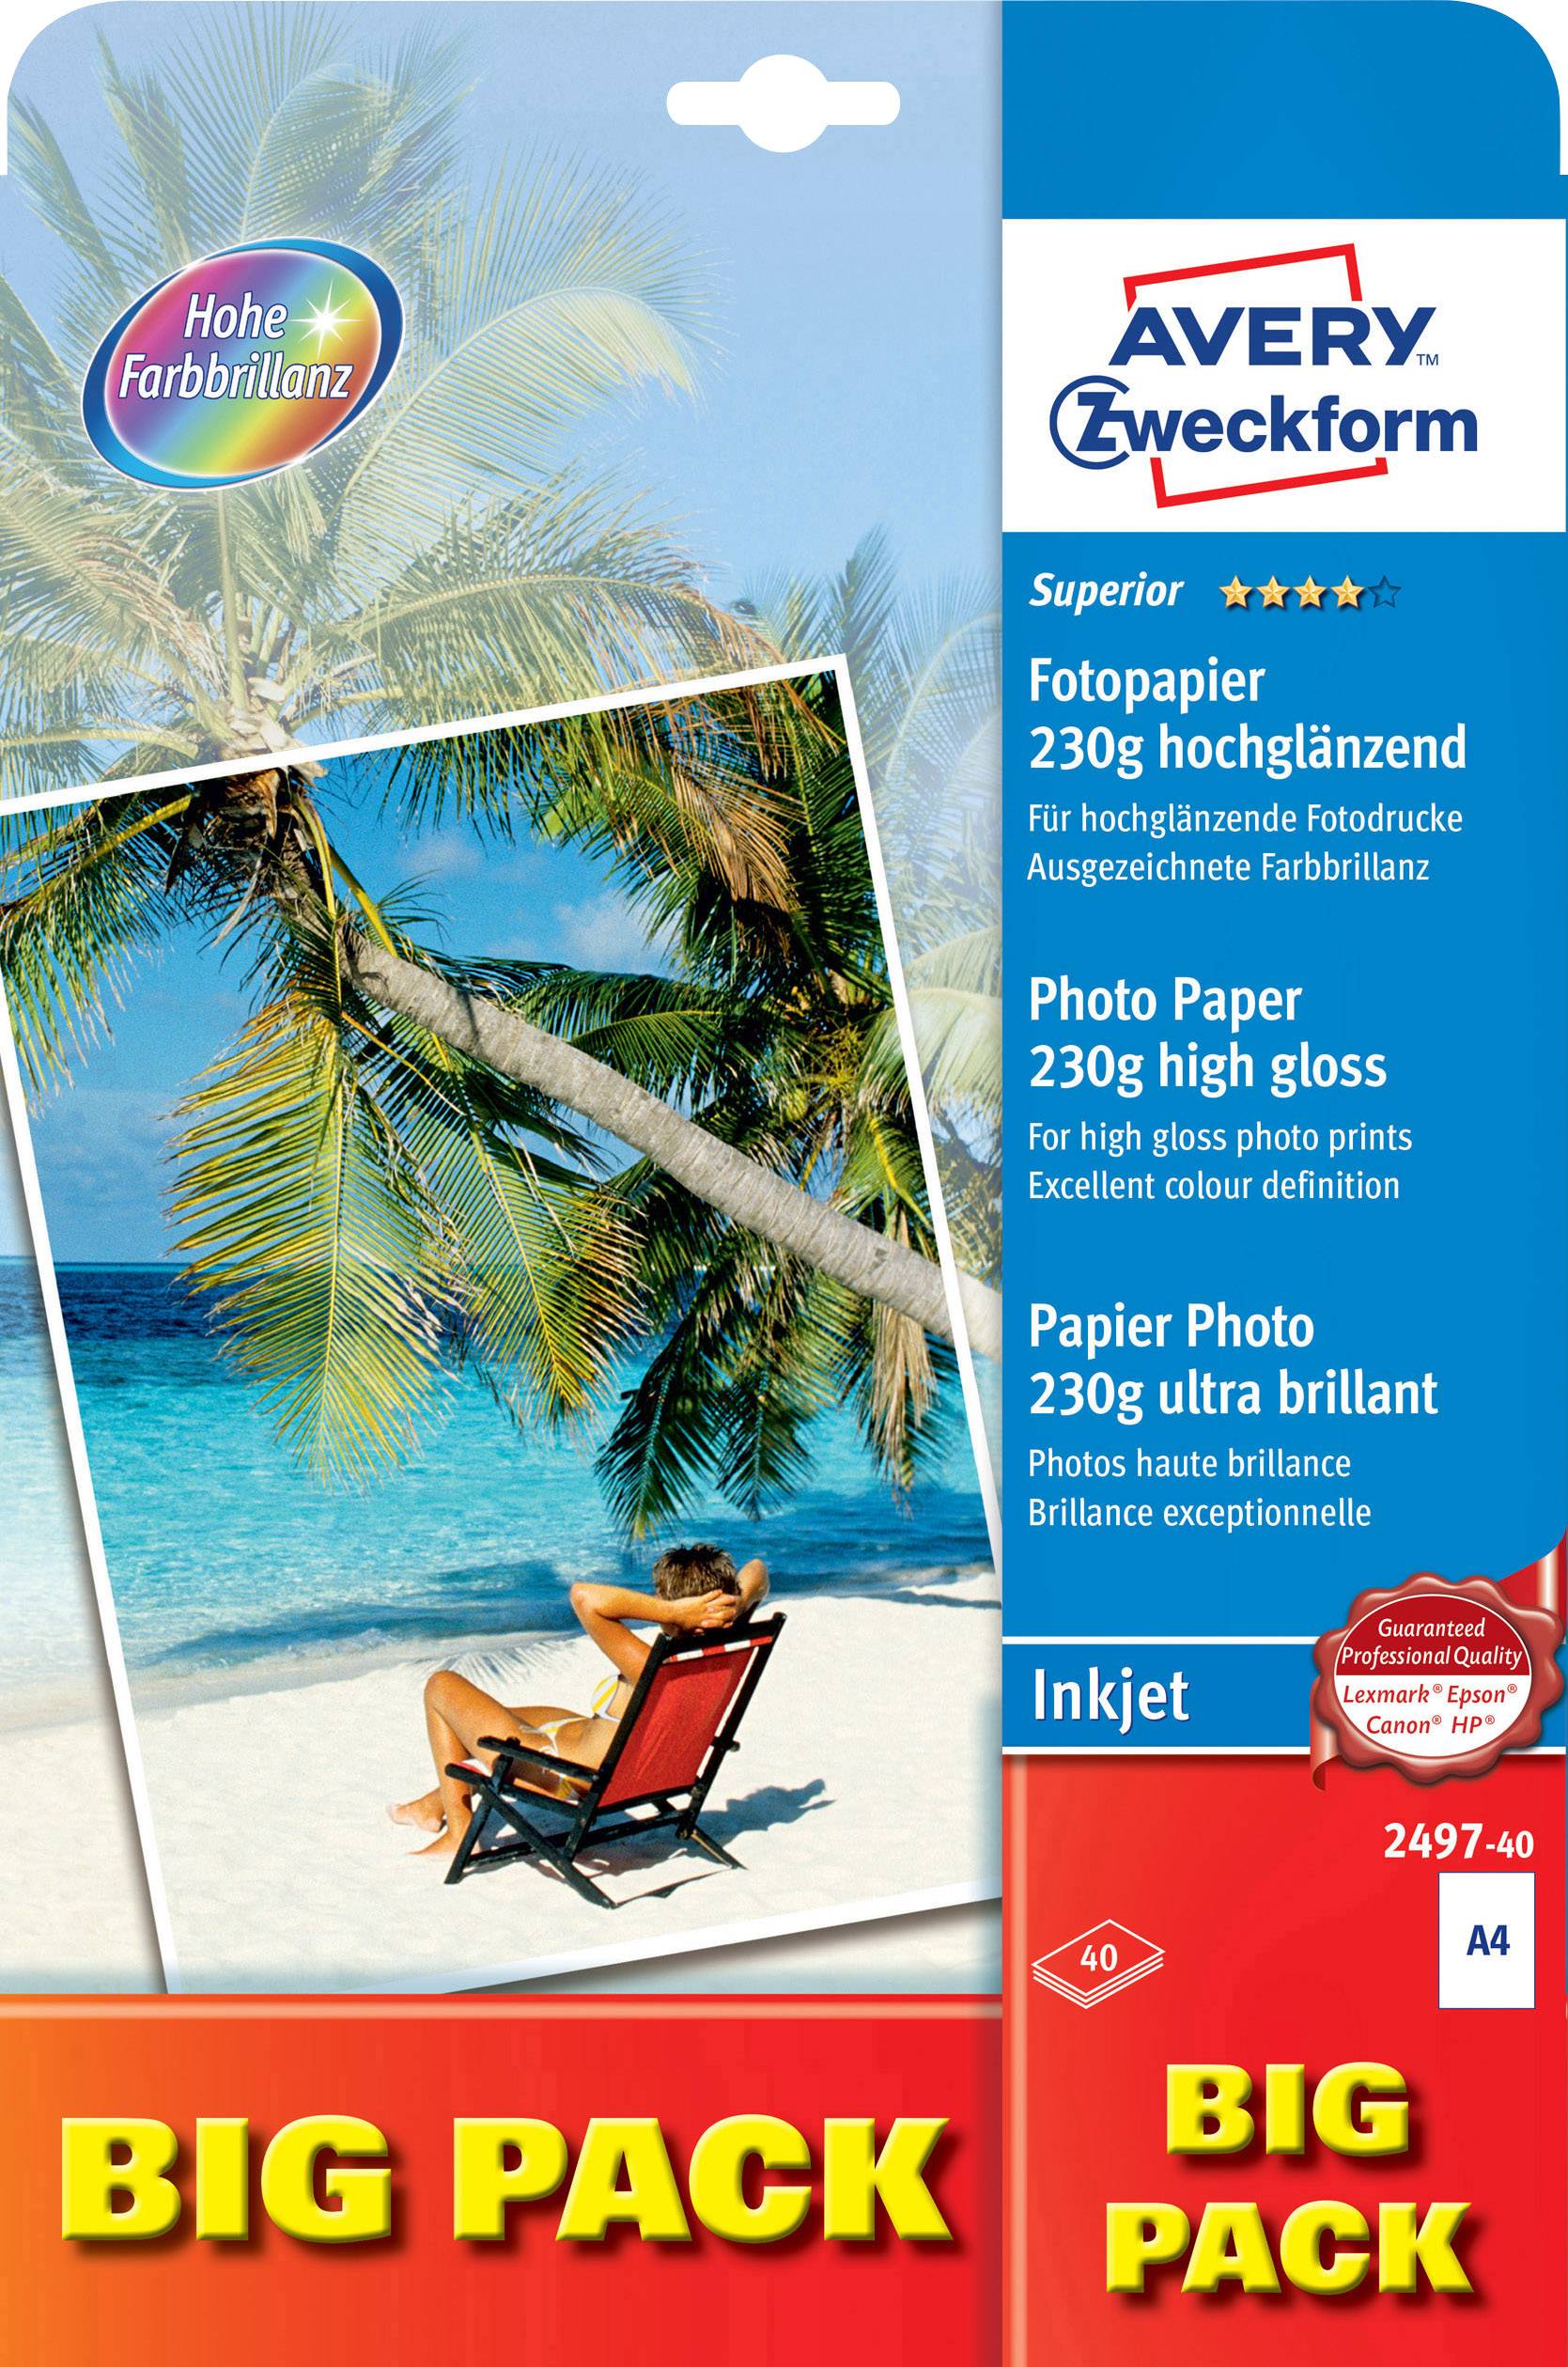 ZWECKFORM Fotopapier Avery-Zweckform Superior Photo Paper Inkjet 2497-40 DIN A4 230 g/m² 40 Blatt Ho